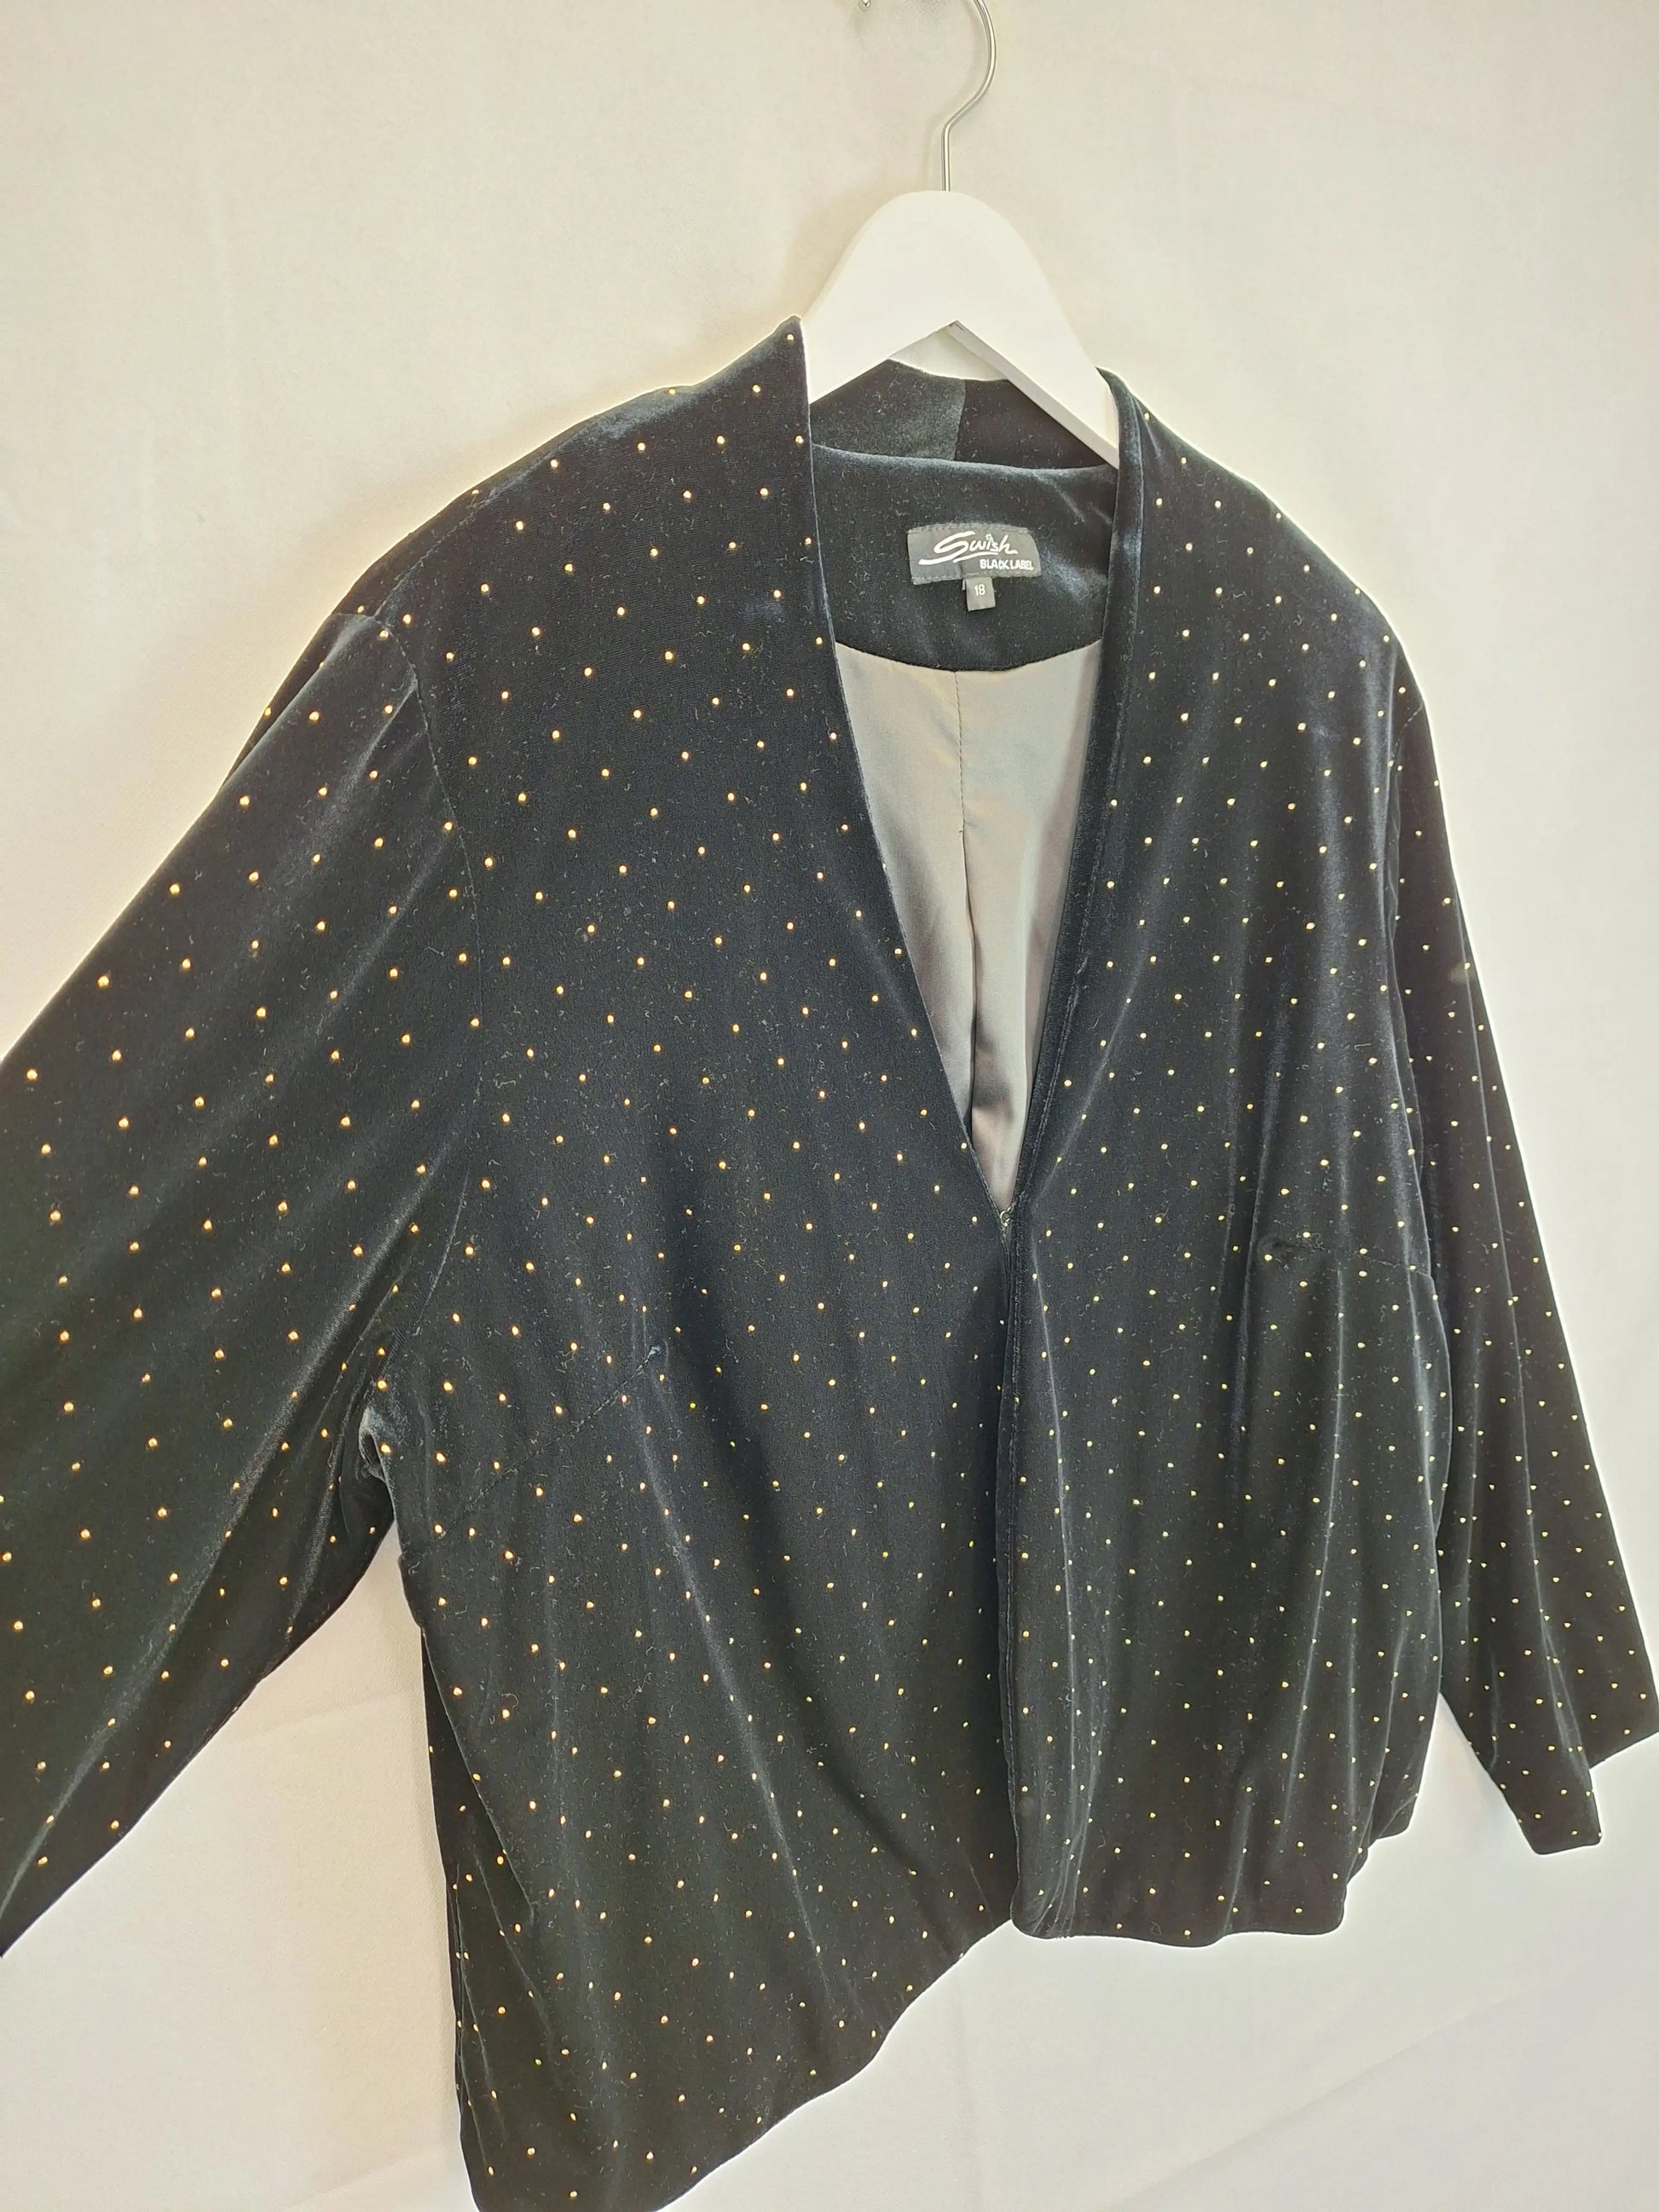 Swish Stylish Velvet Diamante  Jacket Size 18 by SwapUp-Online Second Hand Store-Online Thrift Store